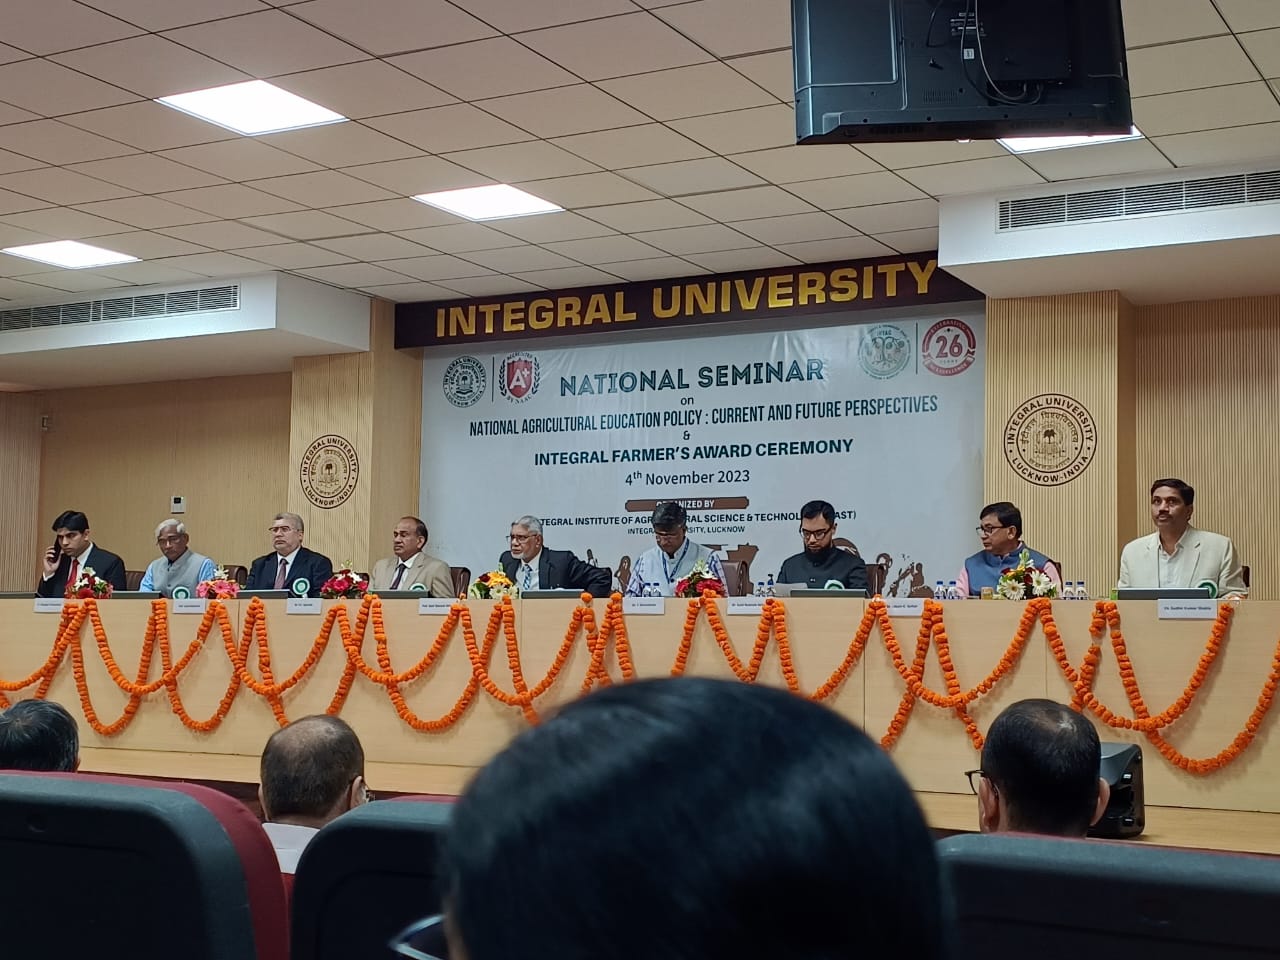 Integral university